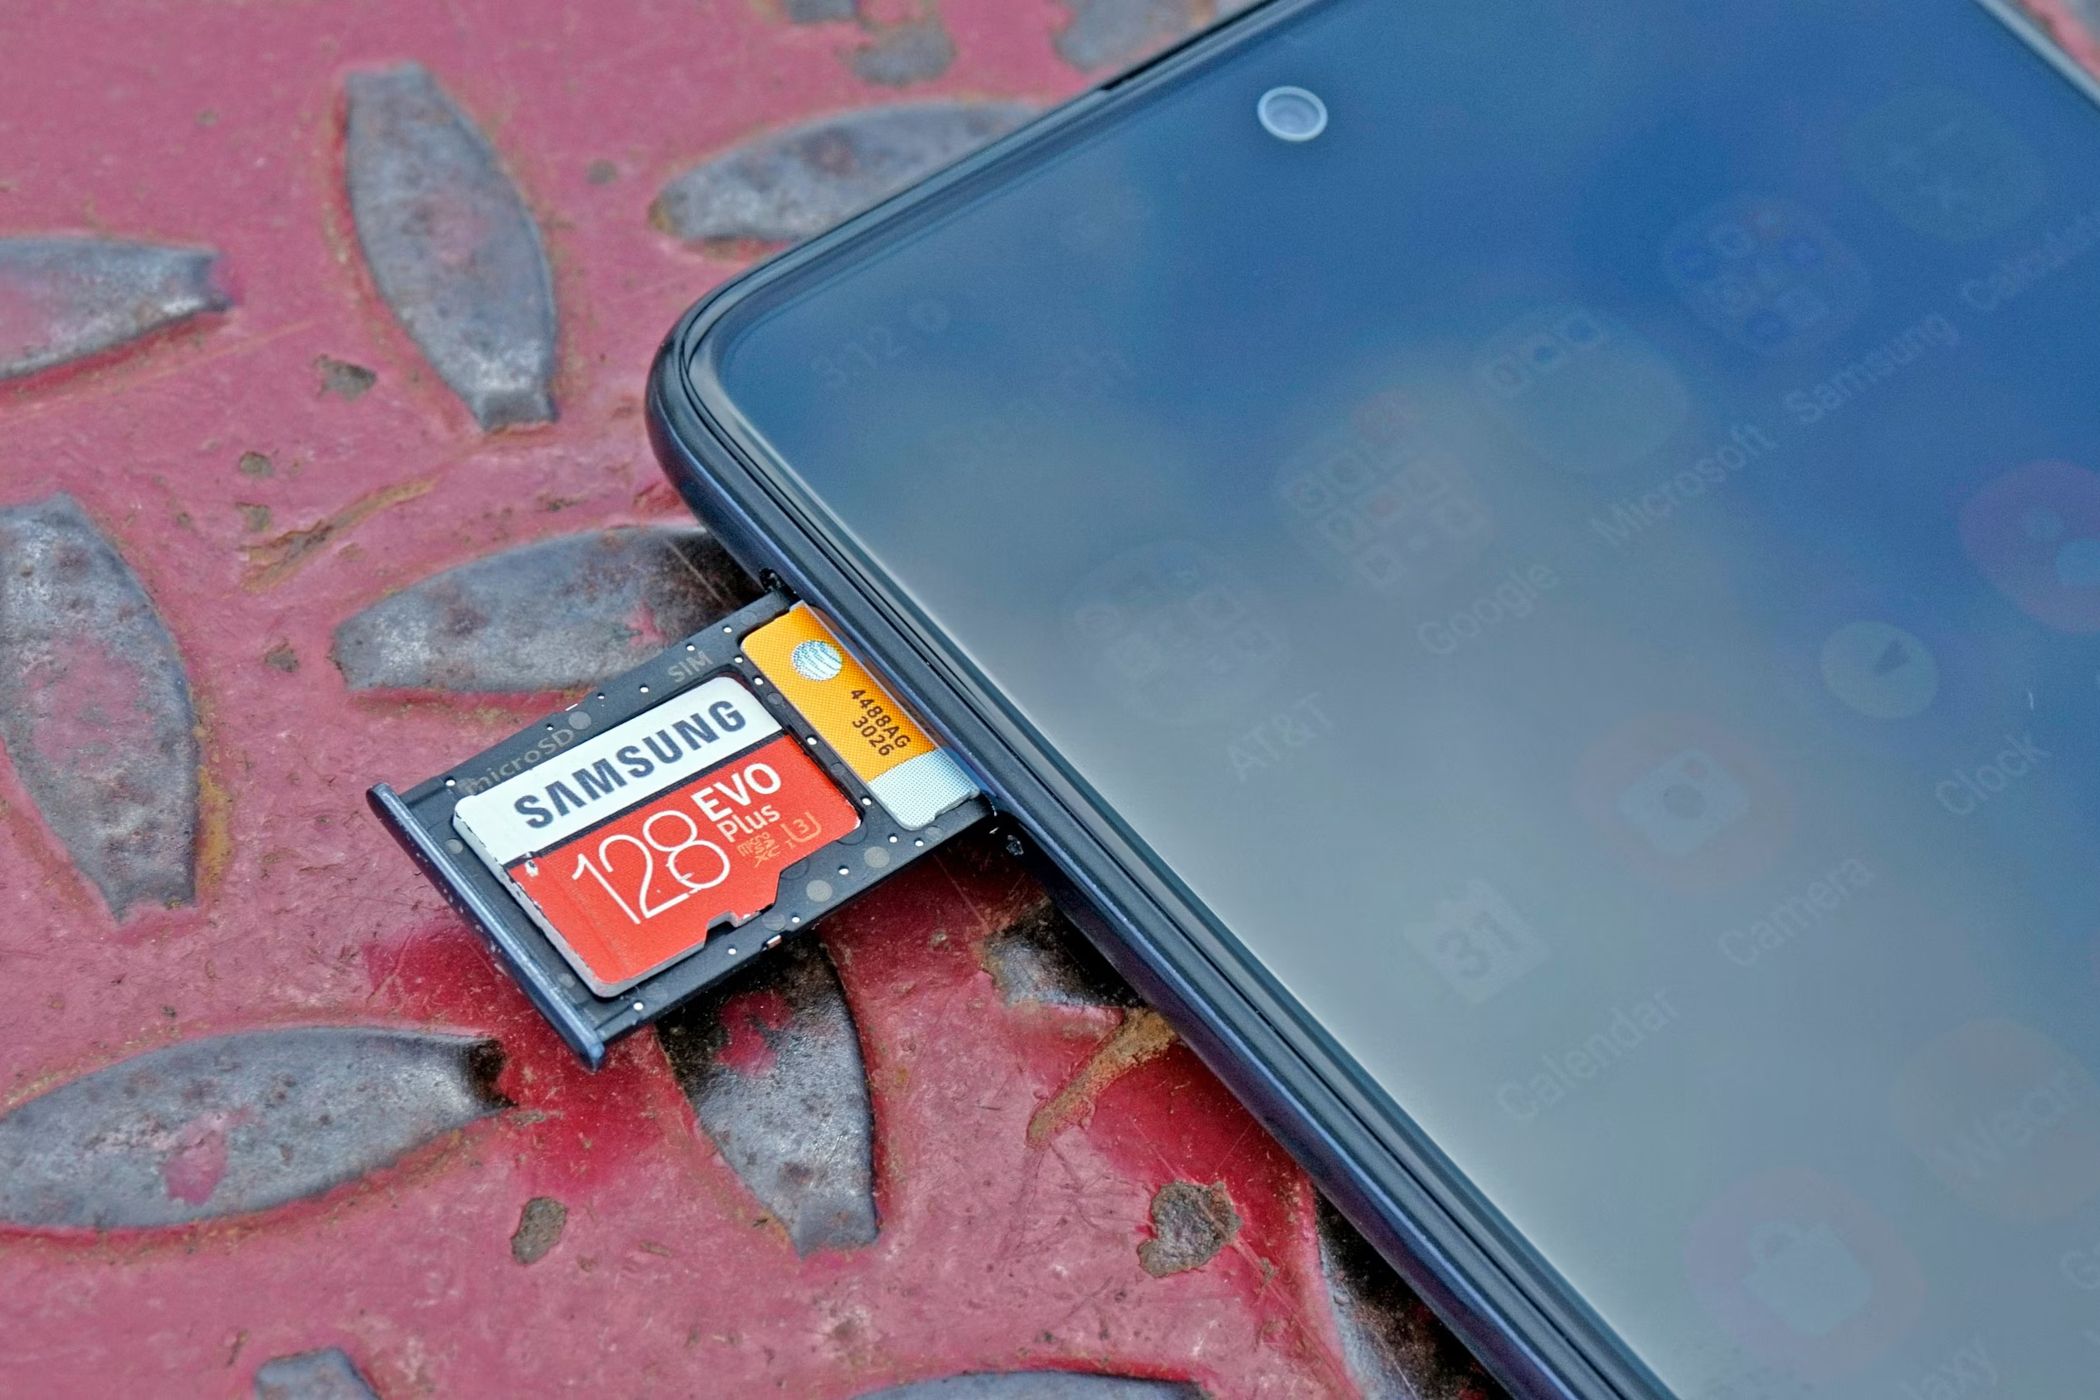 microSD card in a phone.